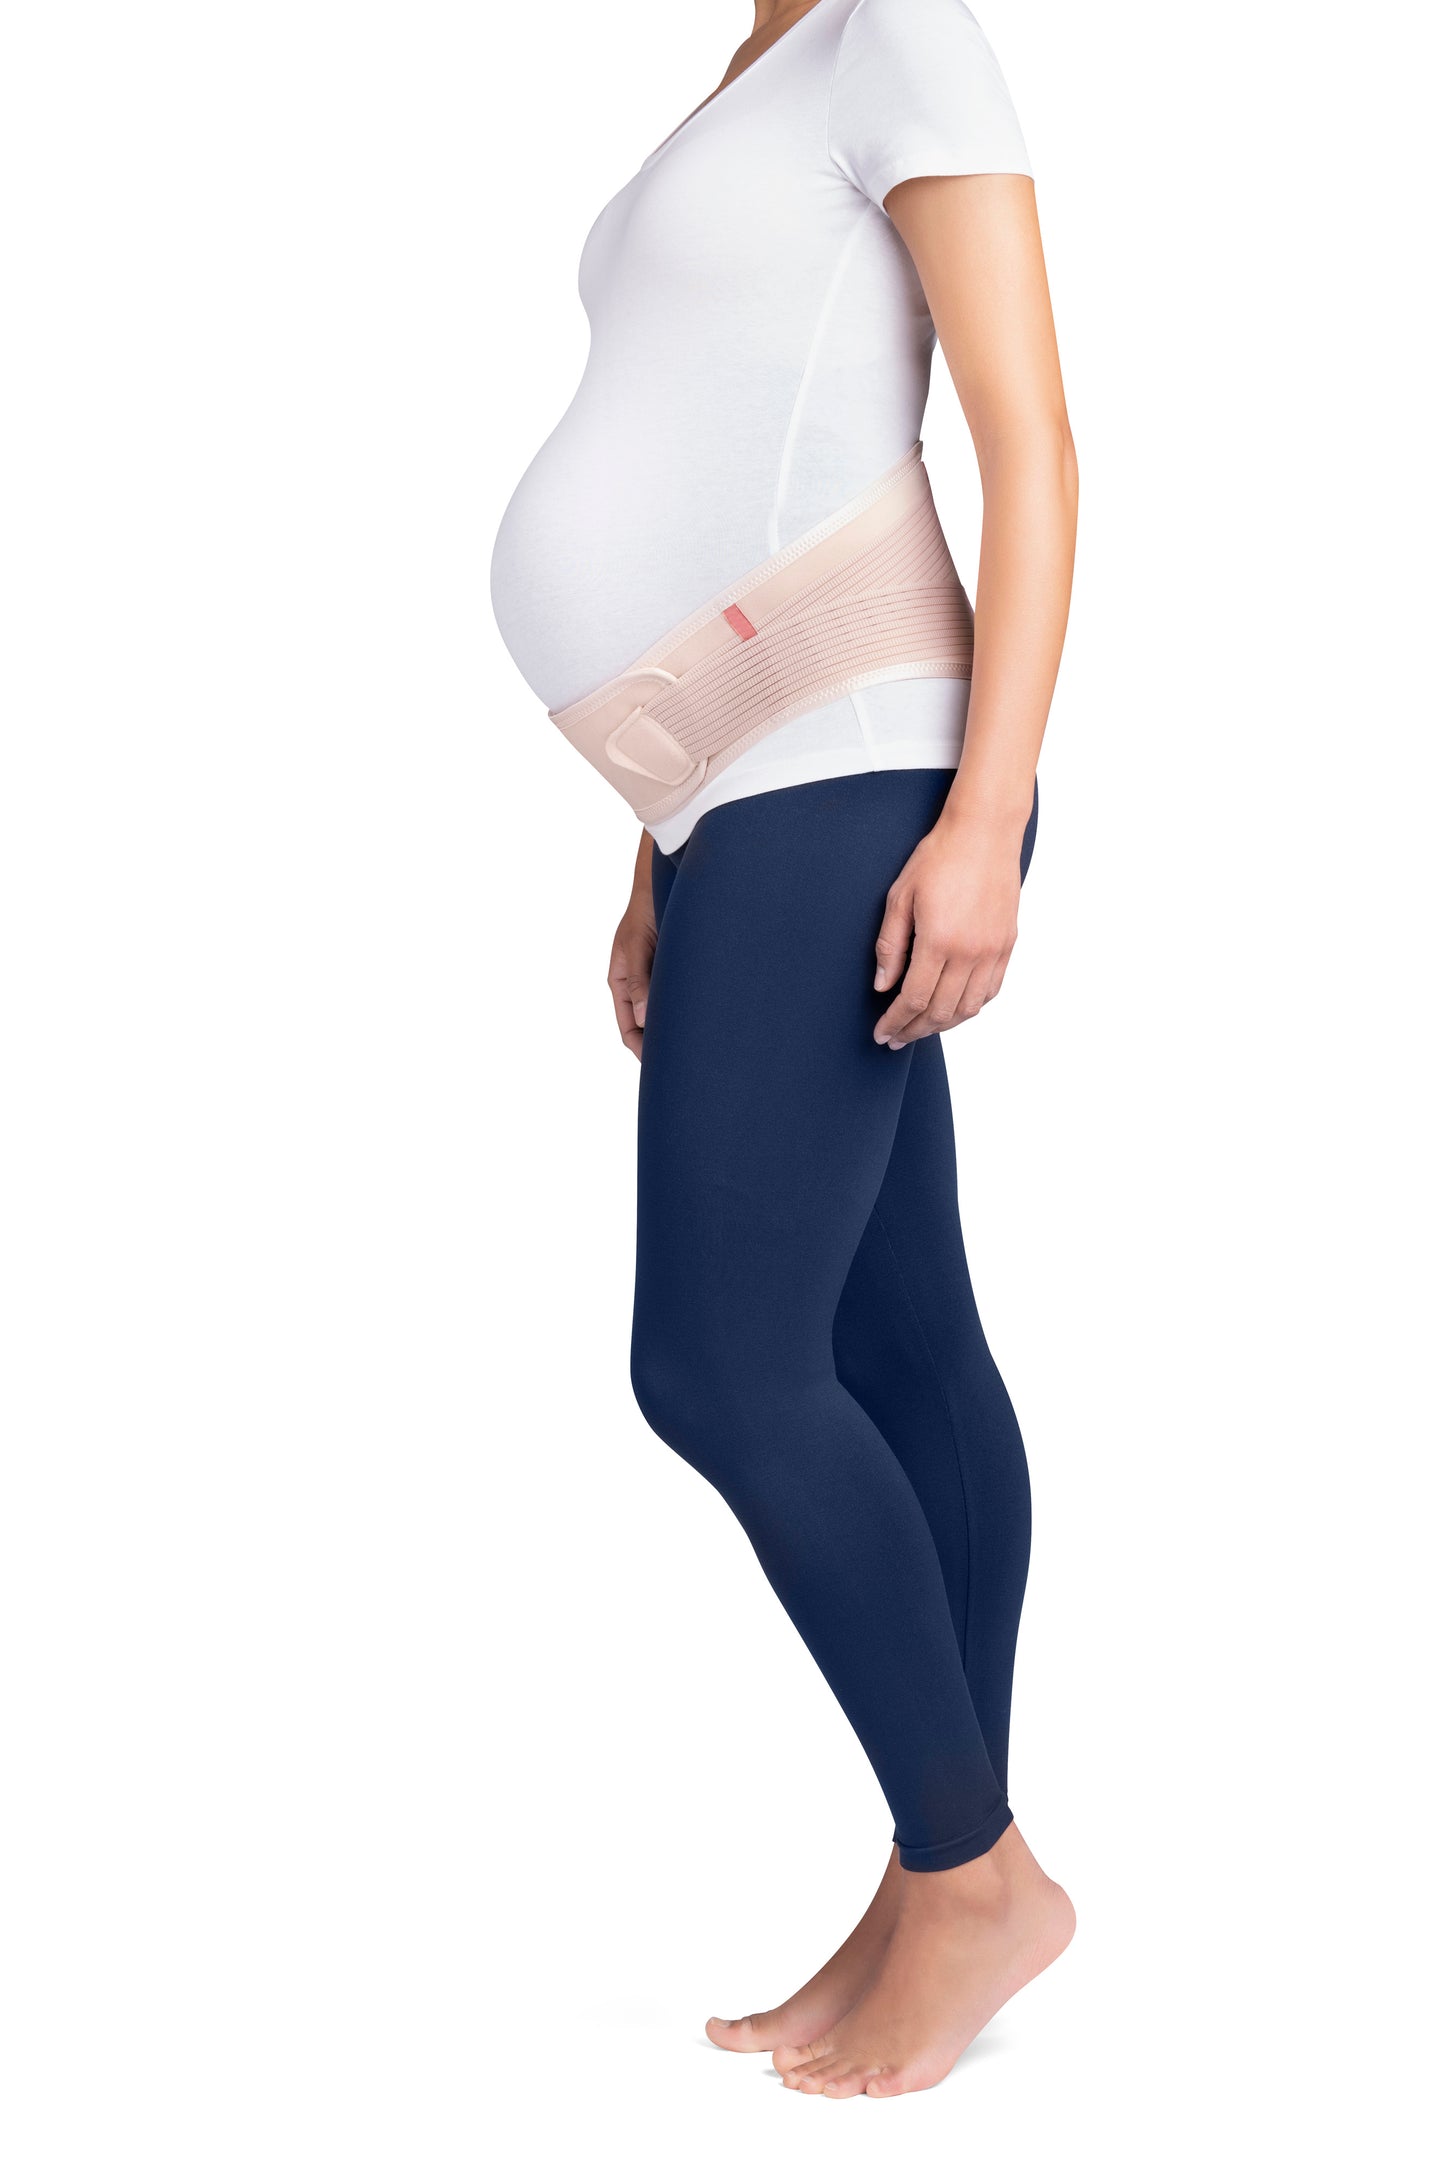 JOBST Maternity Support Belt